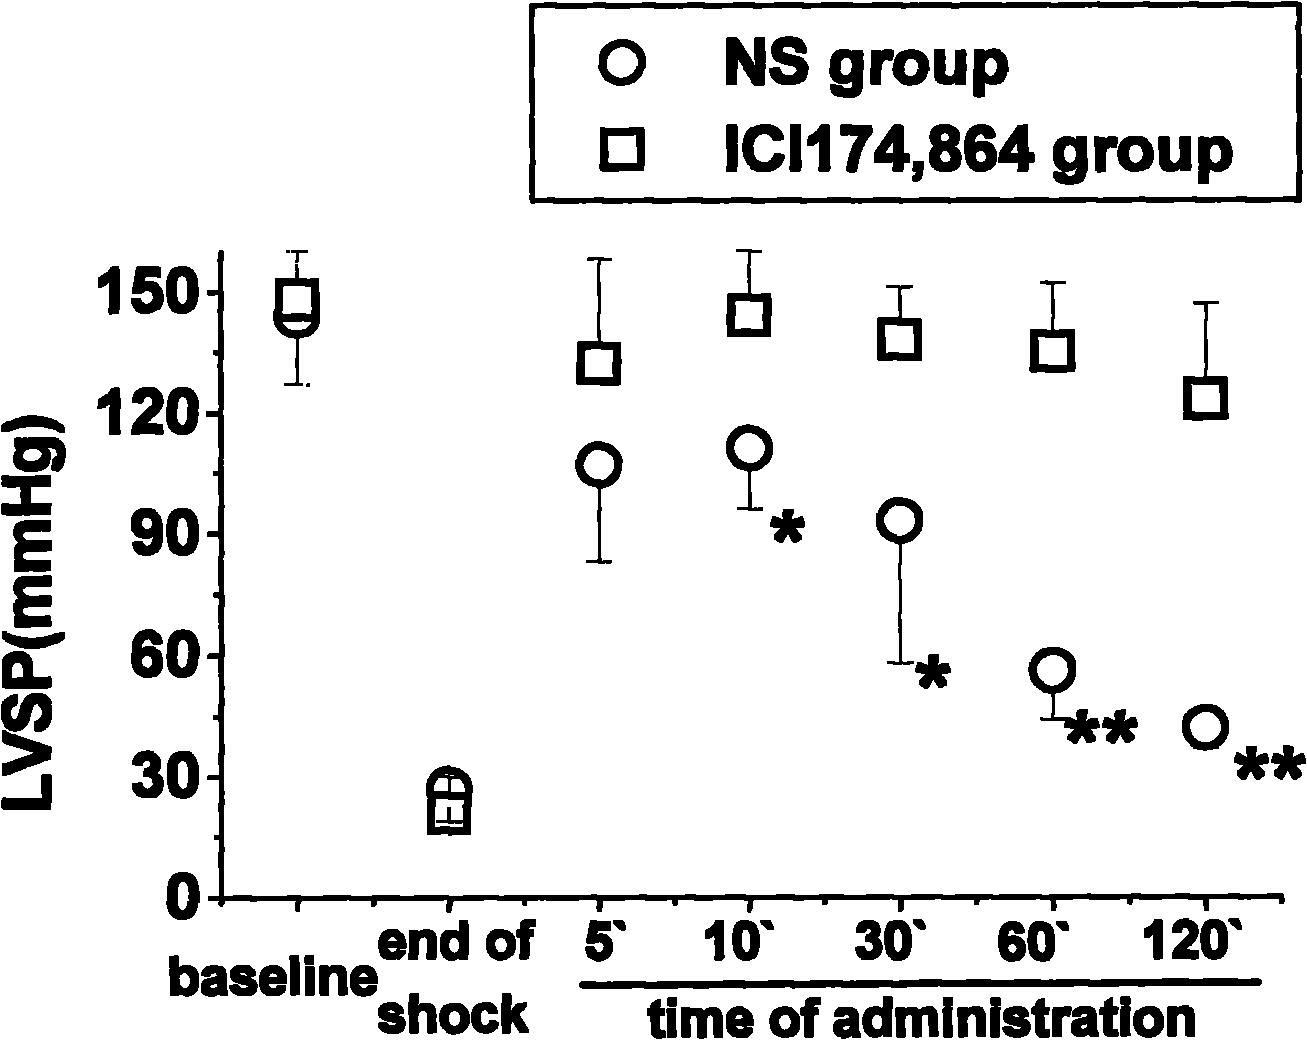 Application of delta opiate receptor antagonist ICI174, 864 for preparing haemorrhagic shock resisting medicine